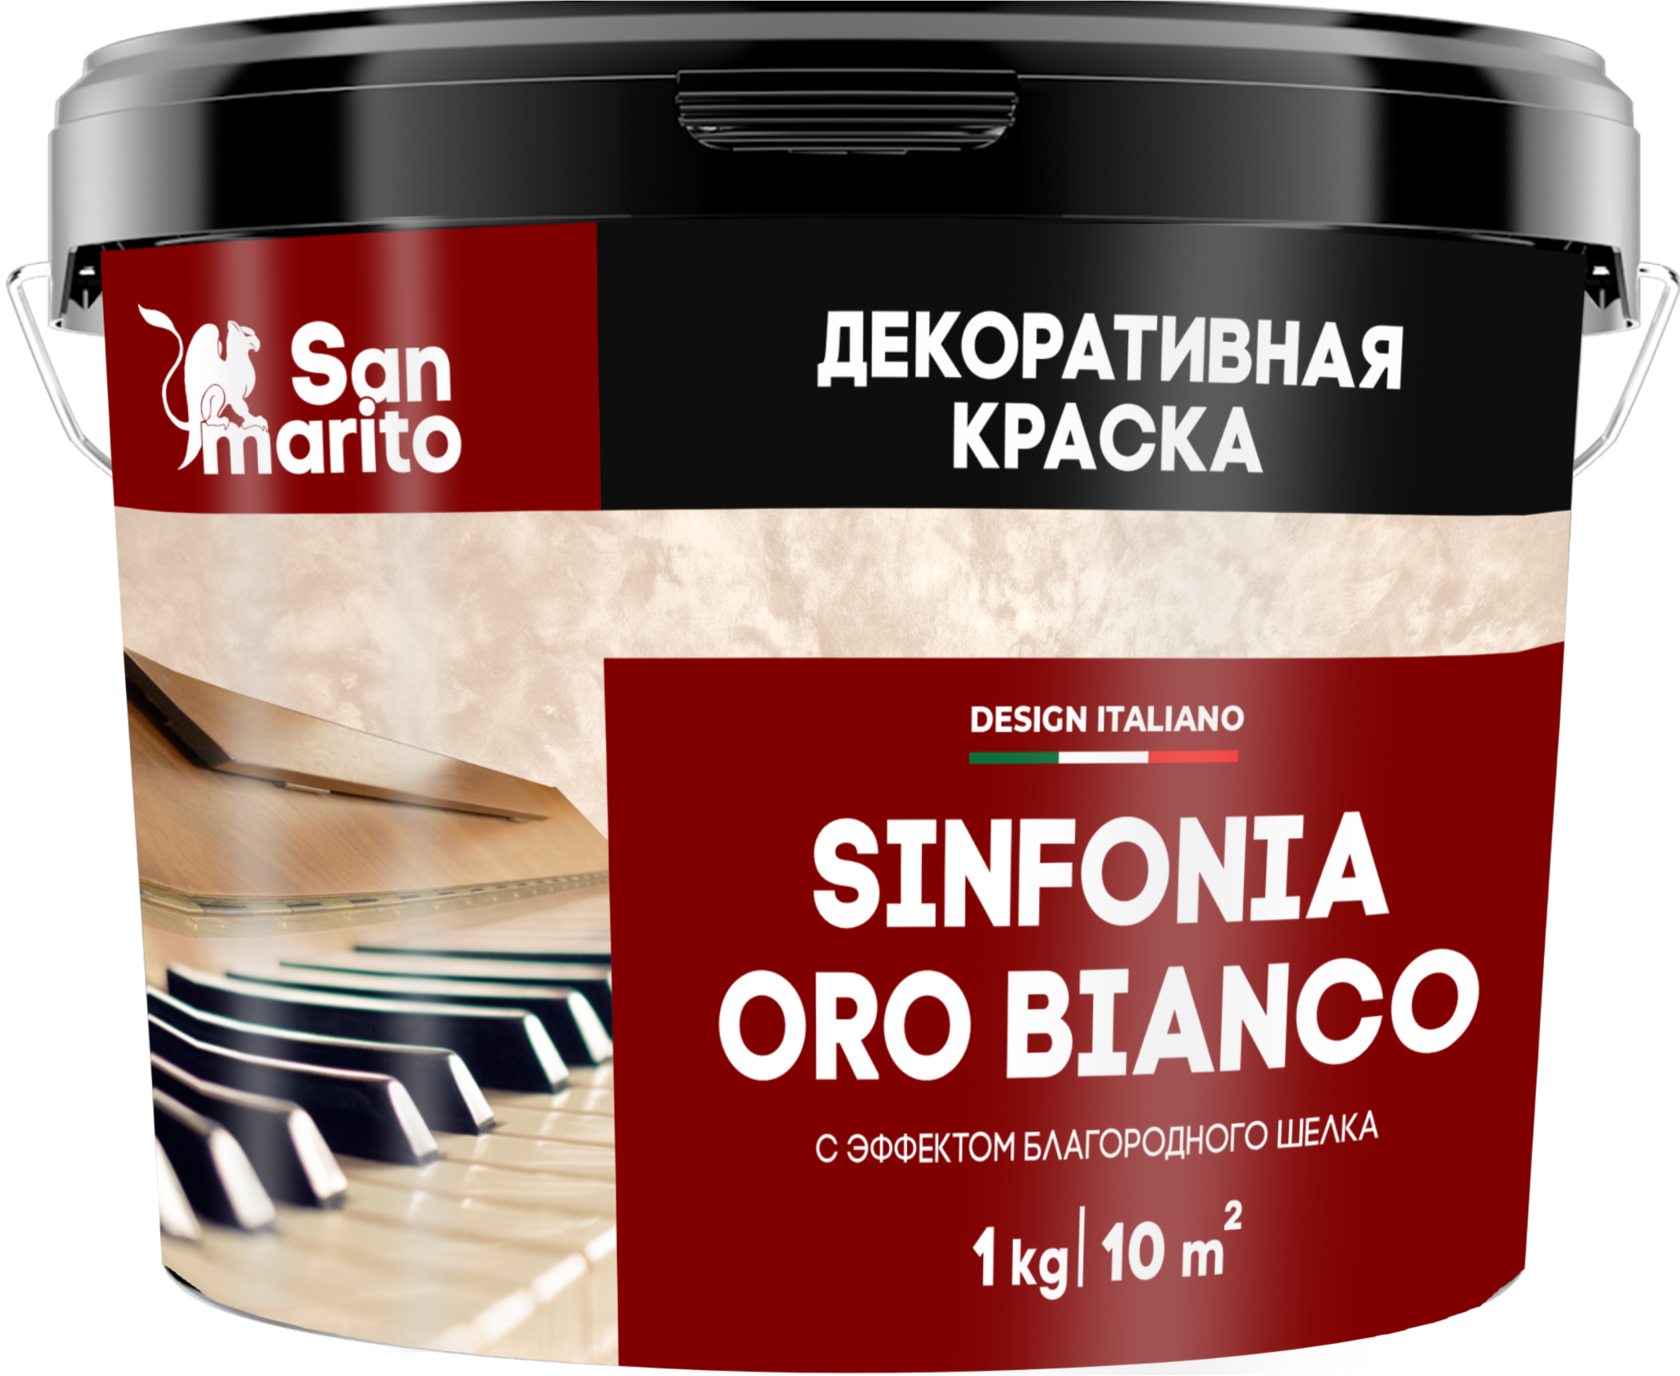 Краска декоративная с эффектом благородного шелка "San Marito Sinfonia Oro Bianco" 3 кг